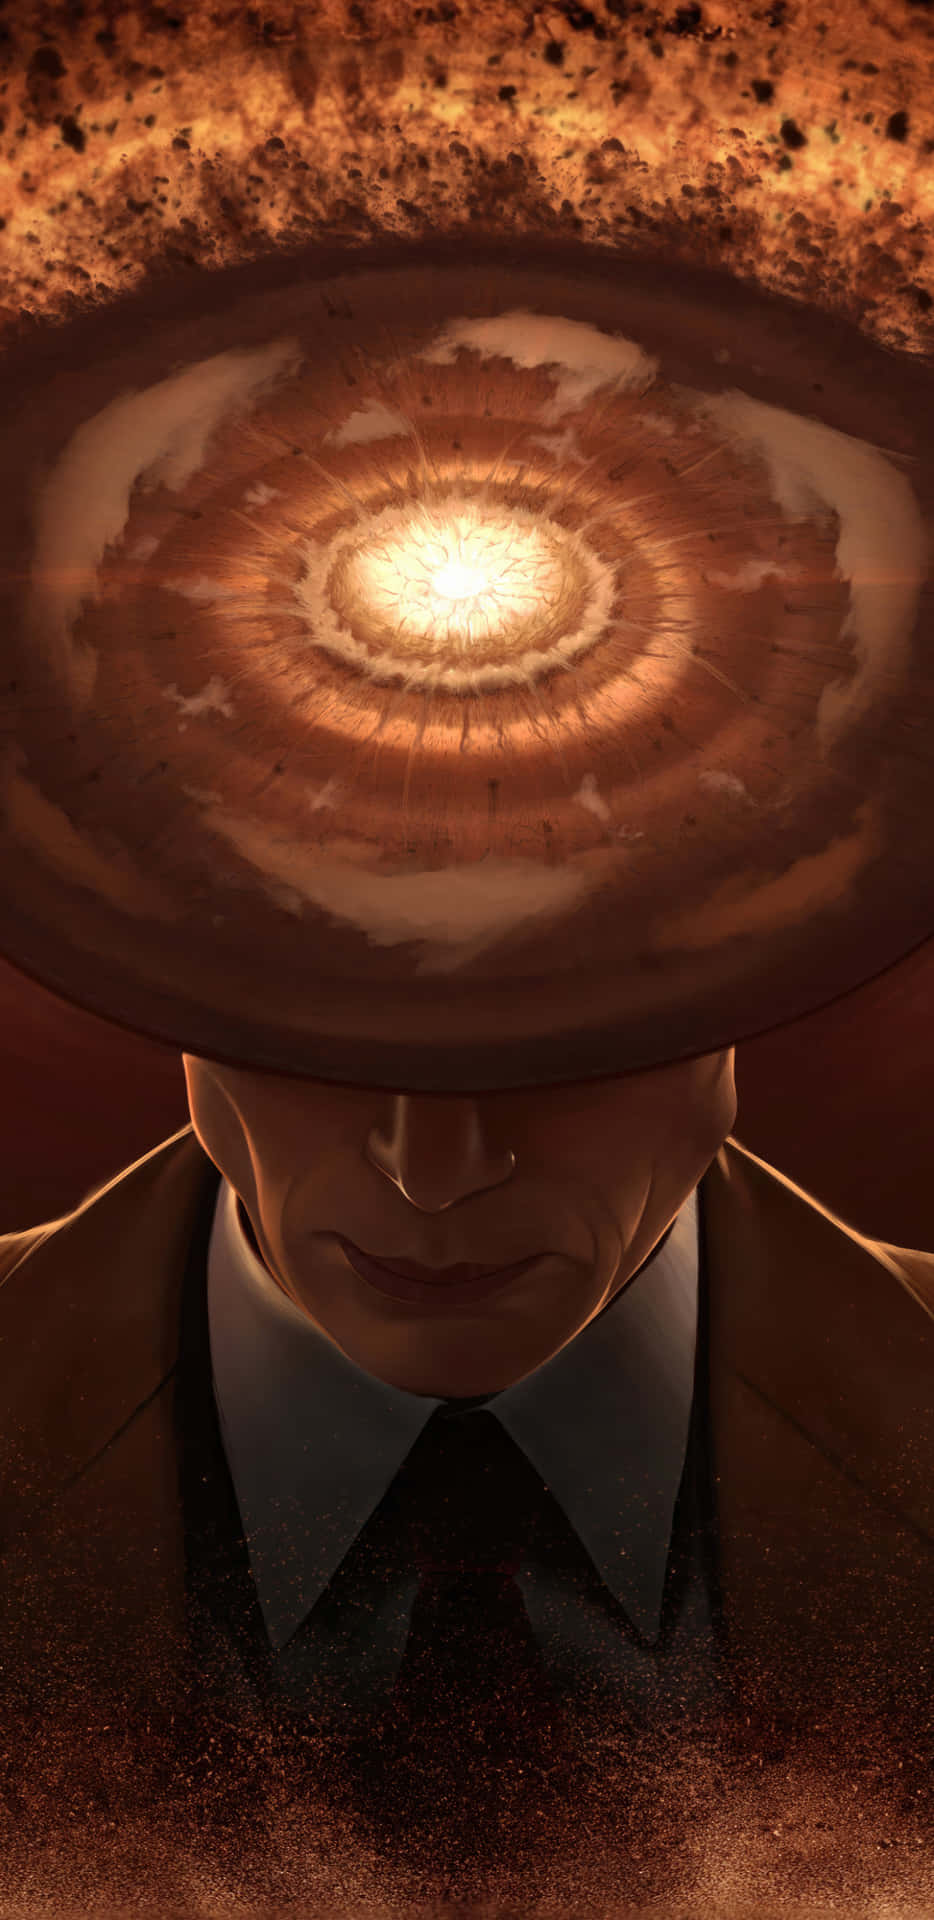 Oppenheimer Nuclear Explosion Hat Wallpaper